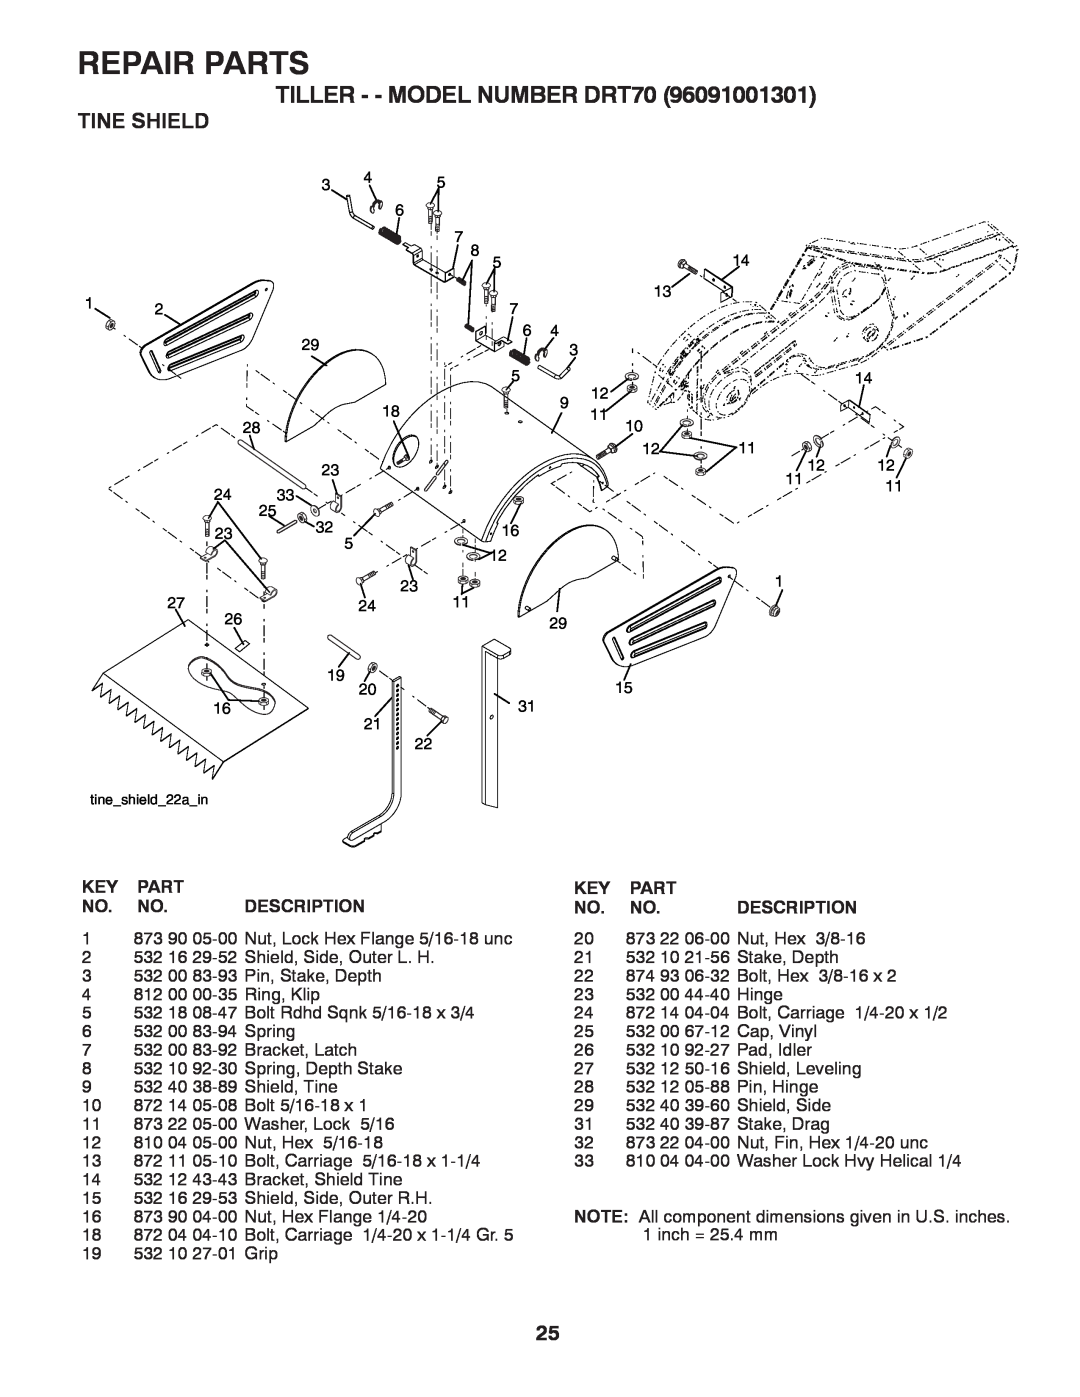 Husqvarna owner manual Tine Shield, Repair Parts, TILLER - - MODEL NUMBER DRT70, Description 